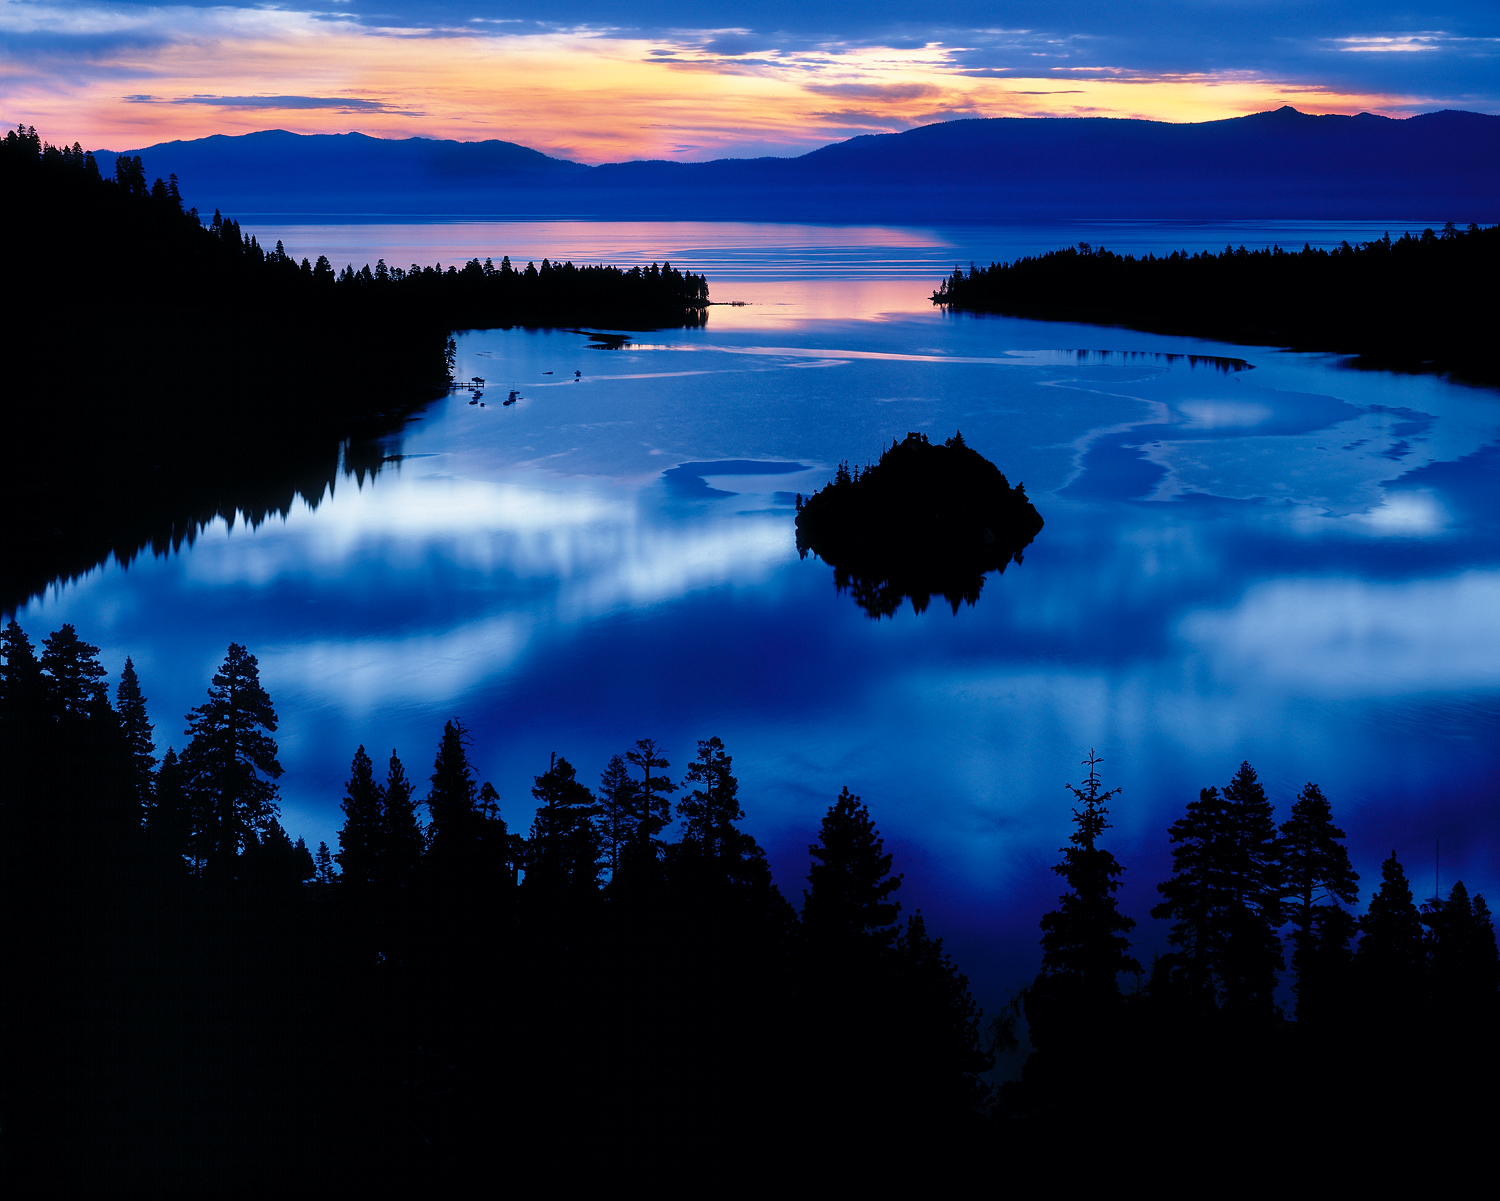 Merlin's Morning, Emerald Bay, Lake Tahoe